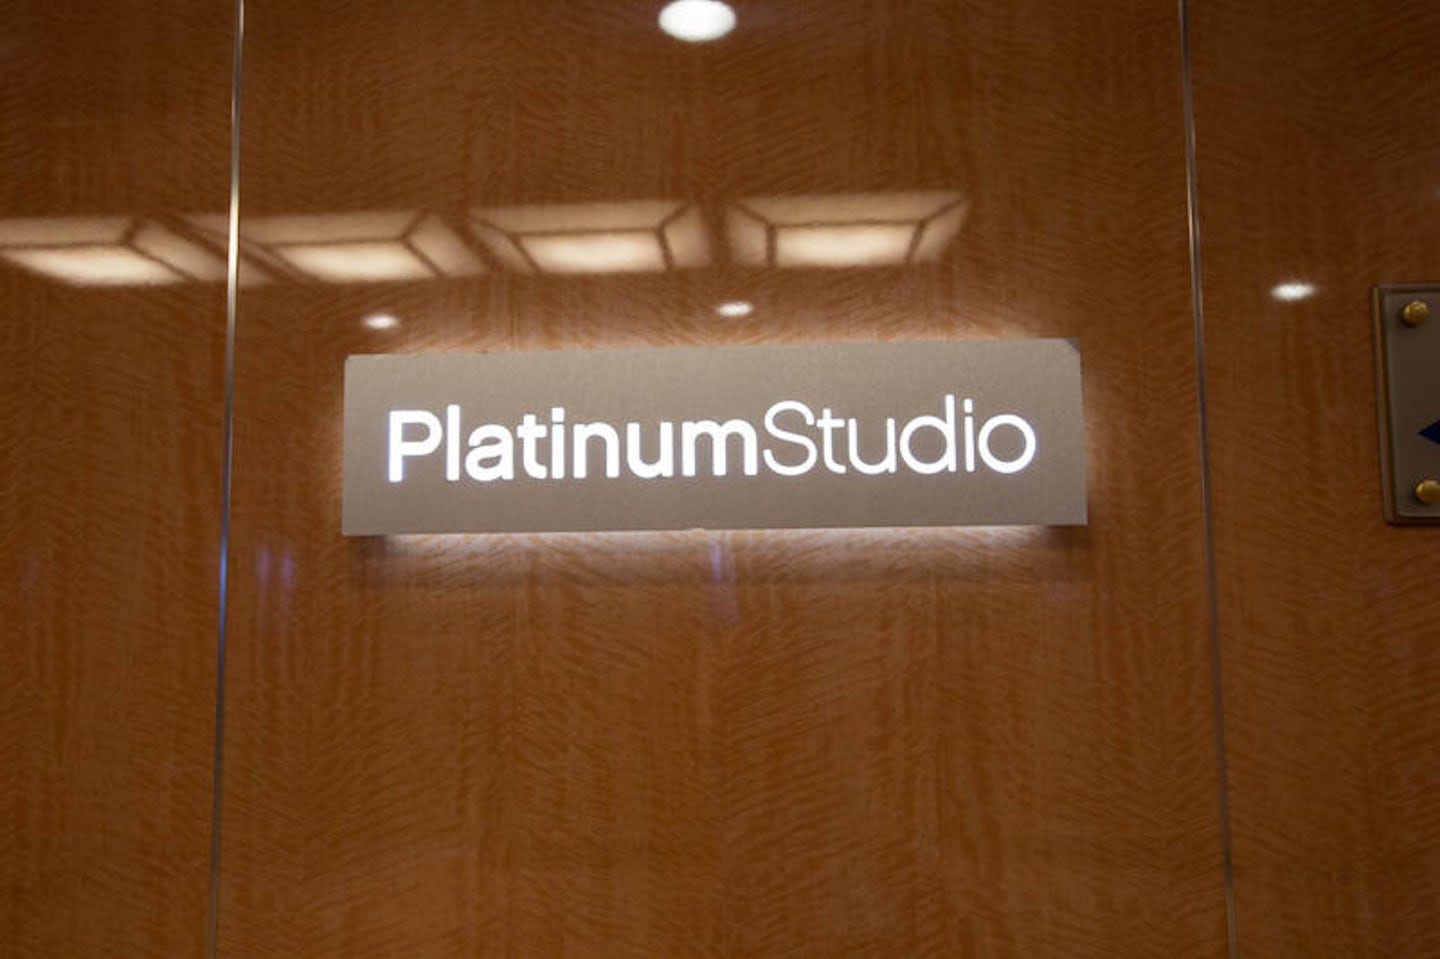 Platinum Studio on Regal Princess